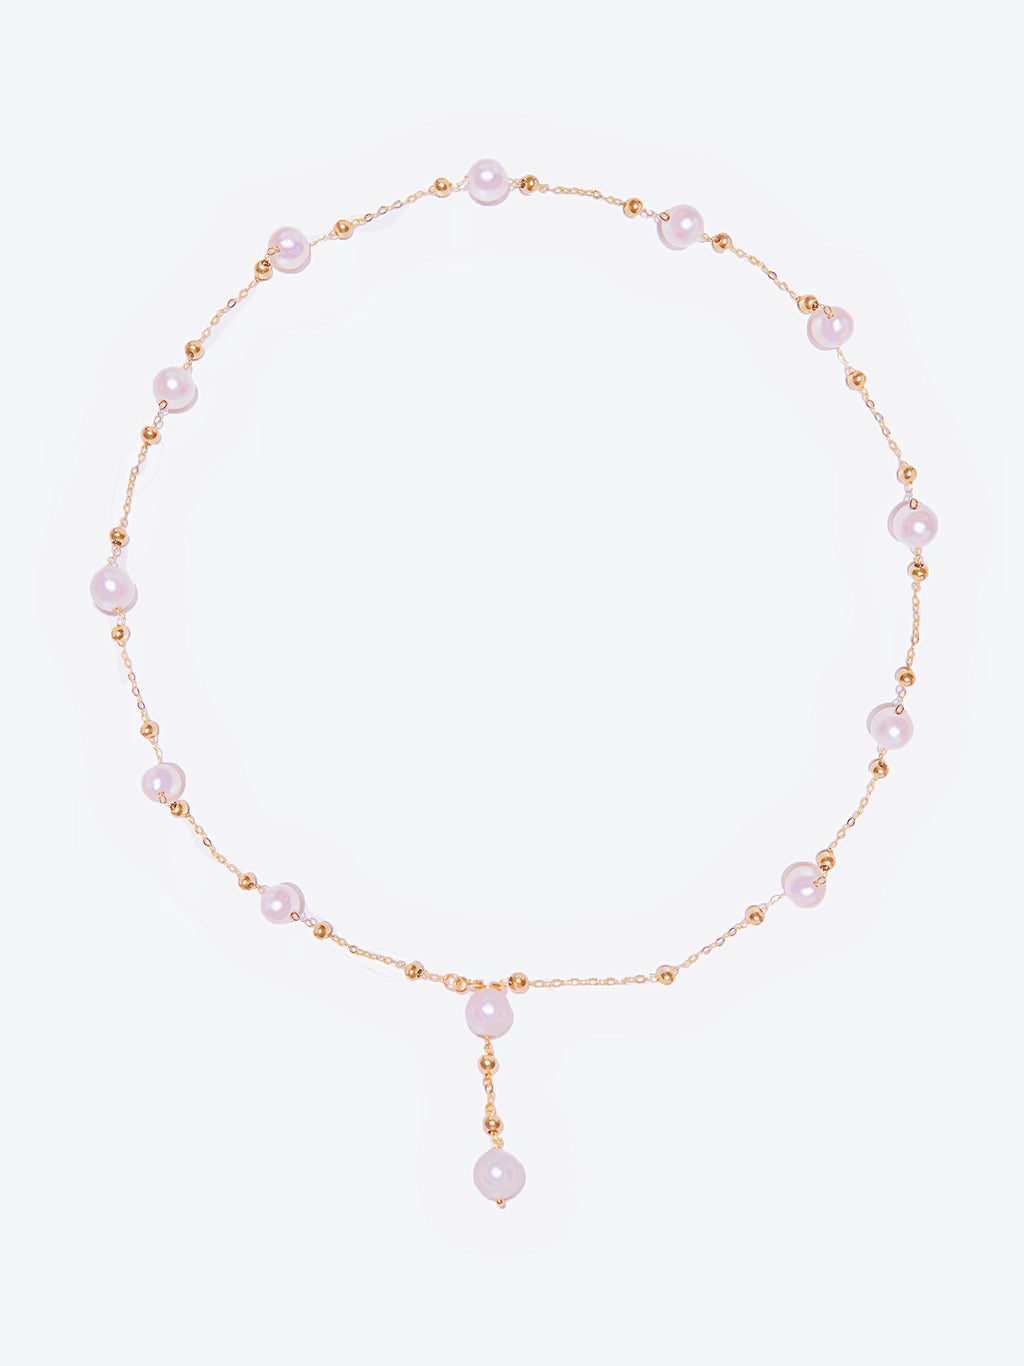 LAFIT · The Elegant Lady - Necklace 明星款Y字型法式珍珠頸鏈